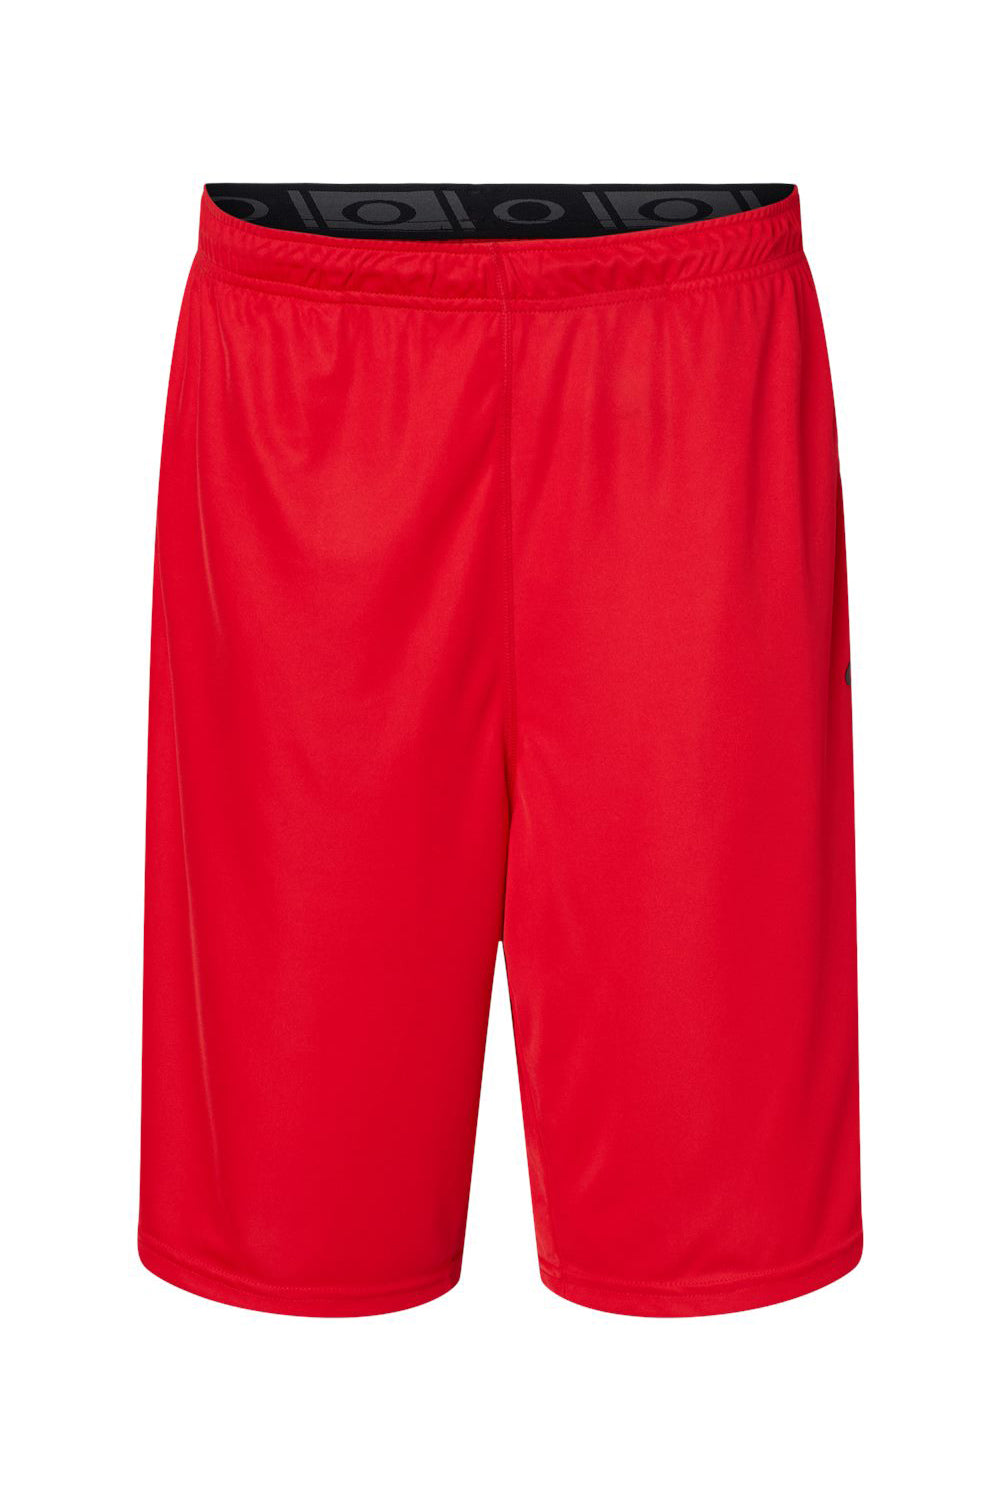 Oakley FOA402995 Mens Team Issue Hydrolix Shorts w/ Pockets Team Red Flat Front